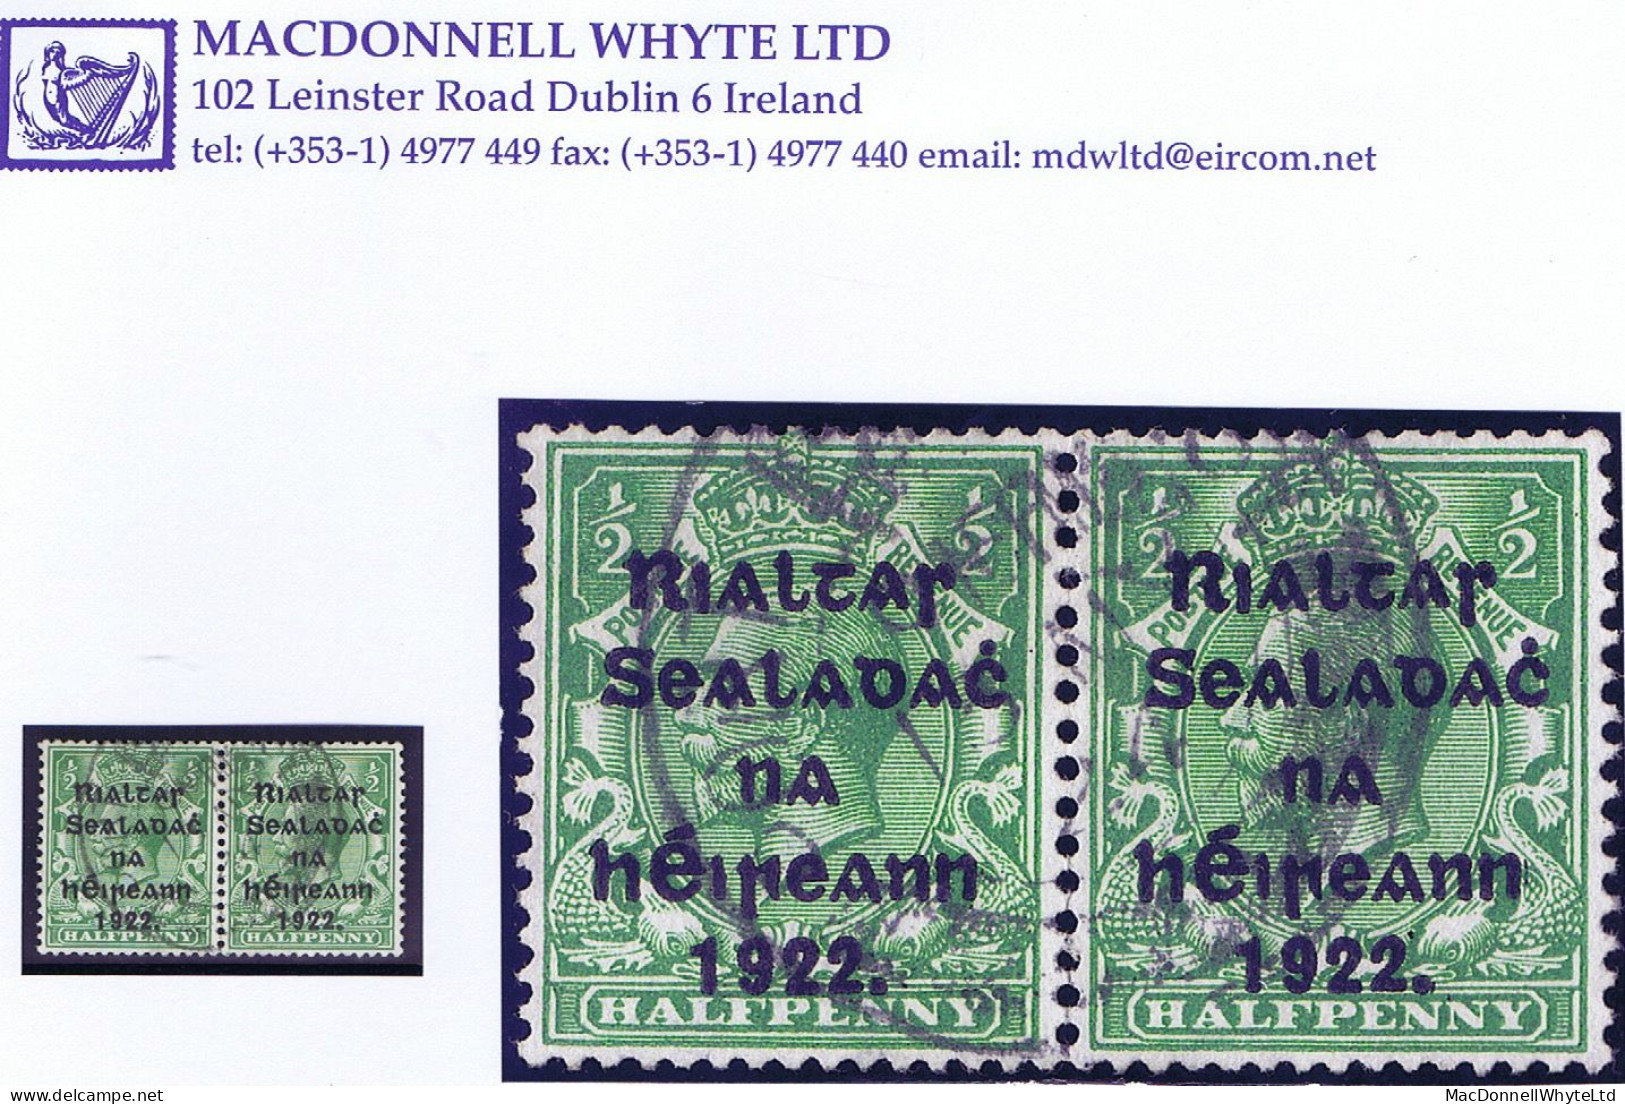 Ireland 1922 Harrison Rialtas 5-line Coils ½d Green Horizontal Pair Fine Used 1924 PORT LAOIGHISE Cds - Usados